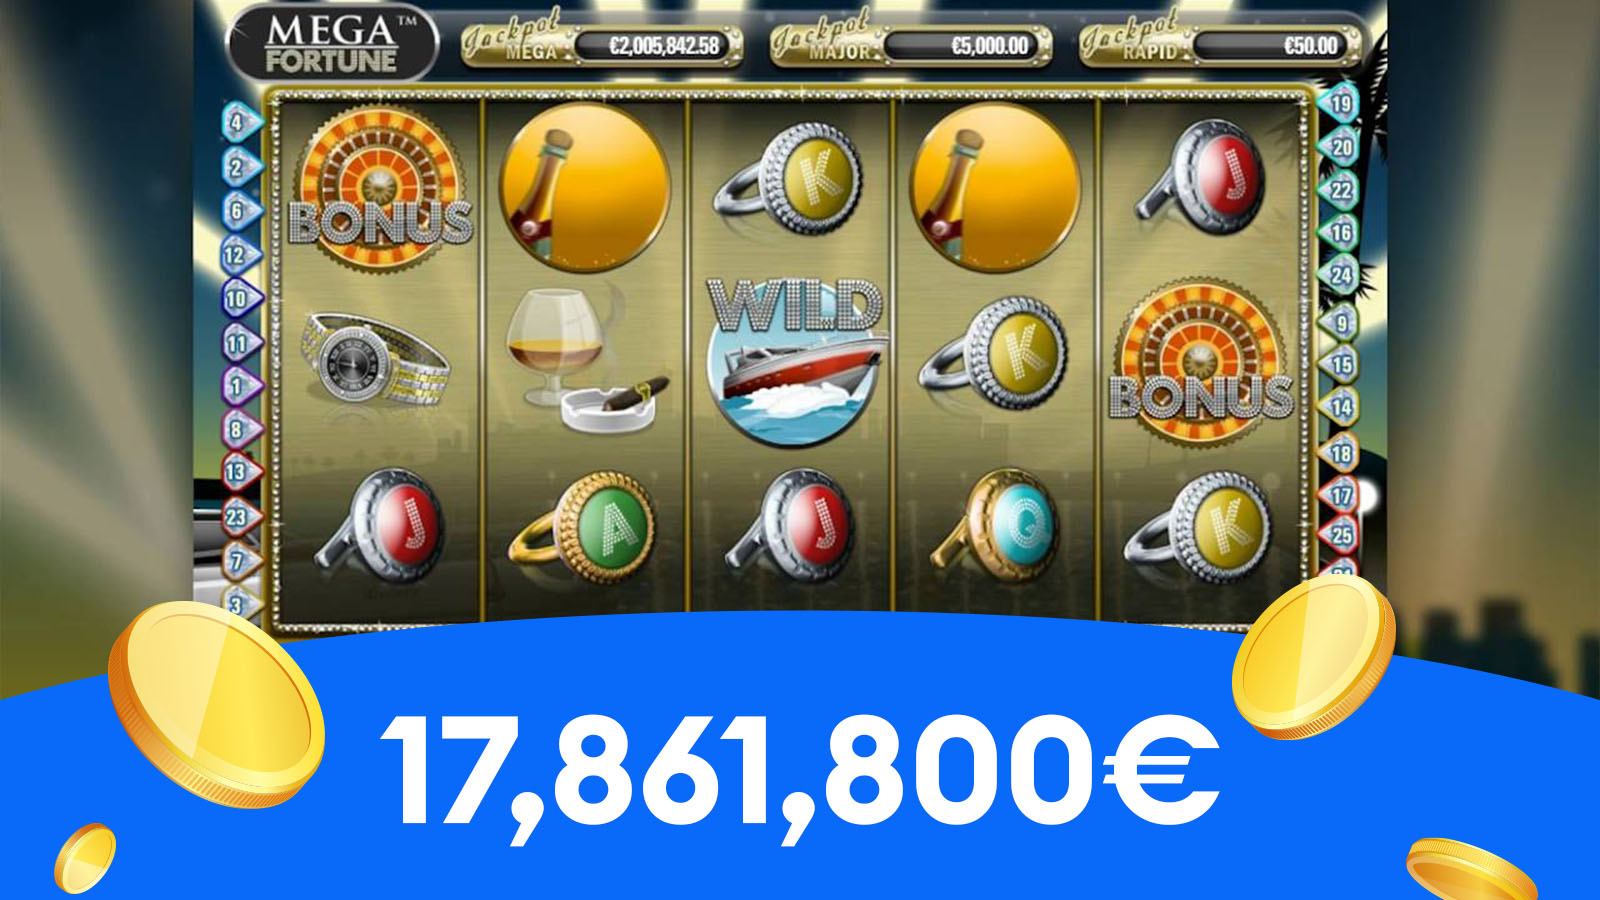 17,861,800€ la Mega Fortune